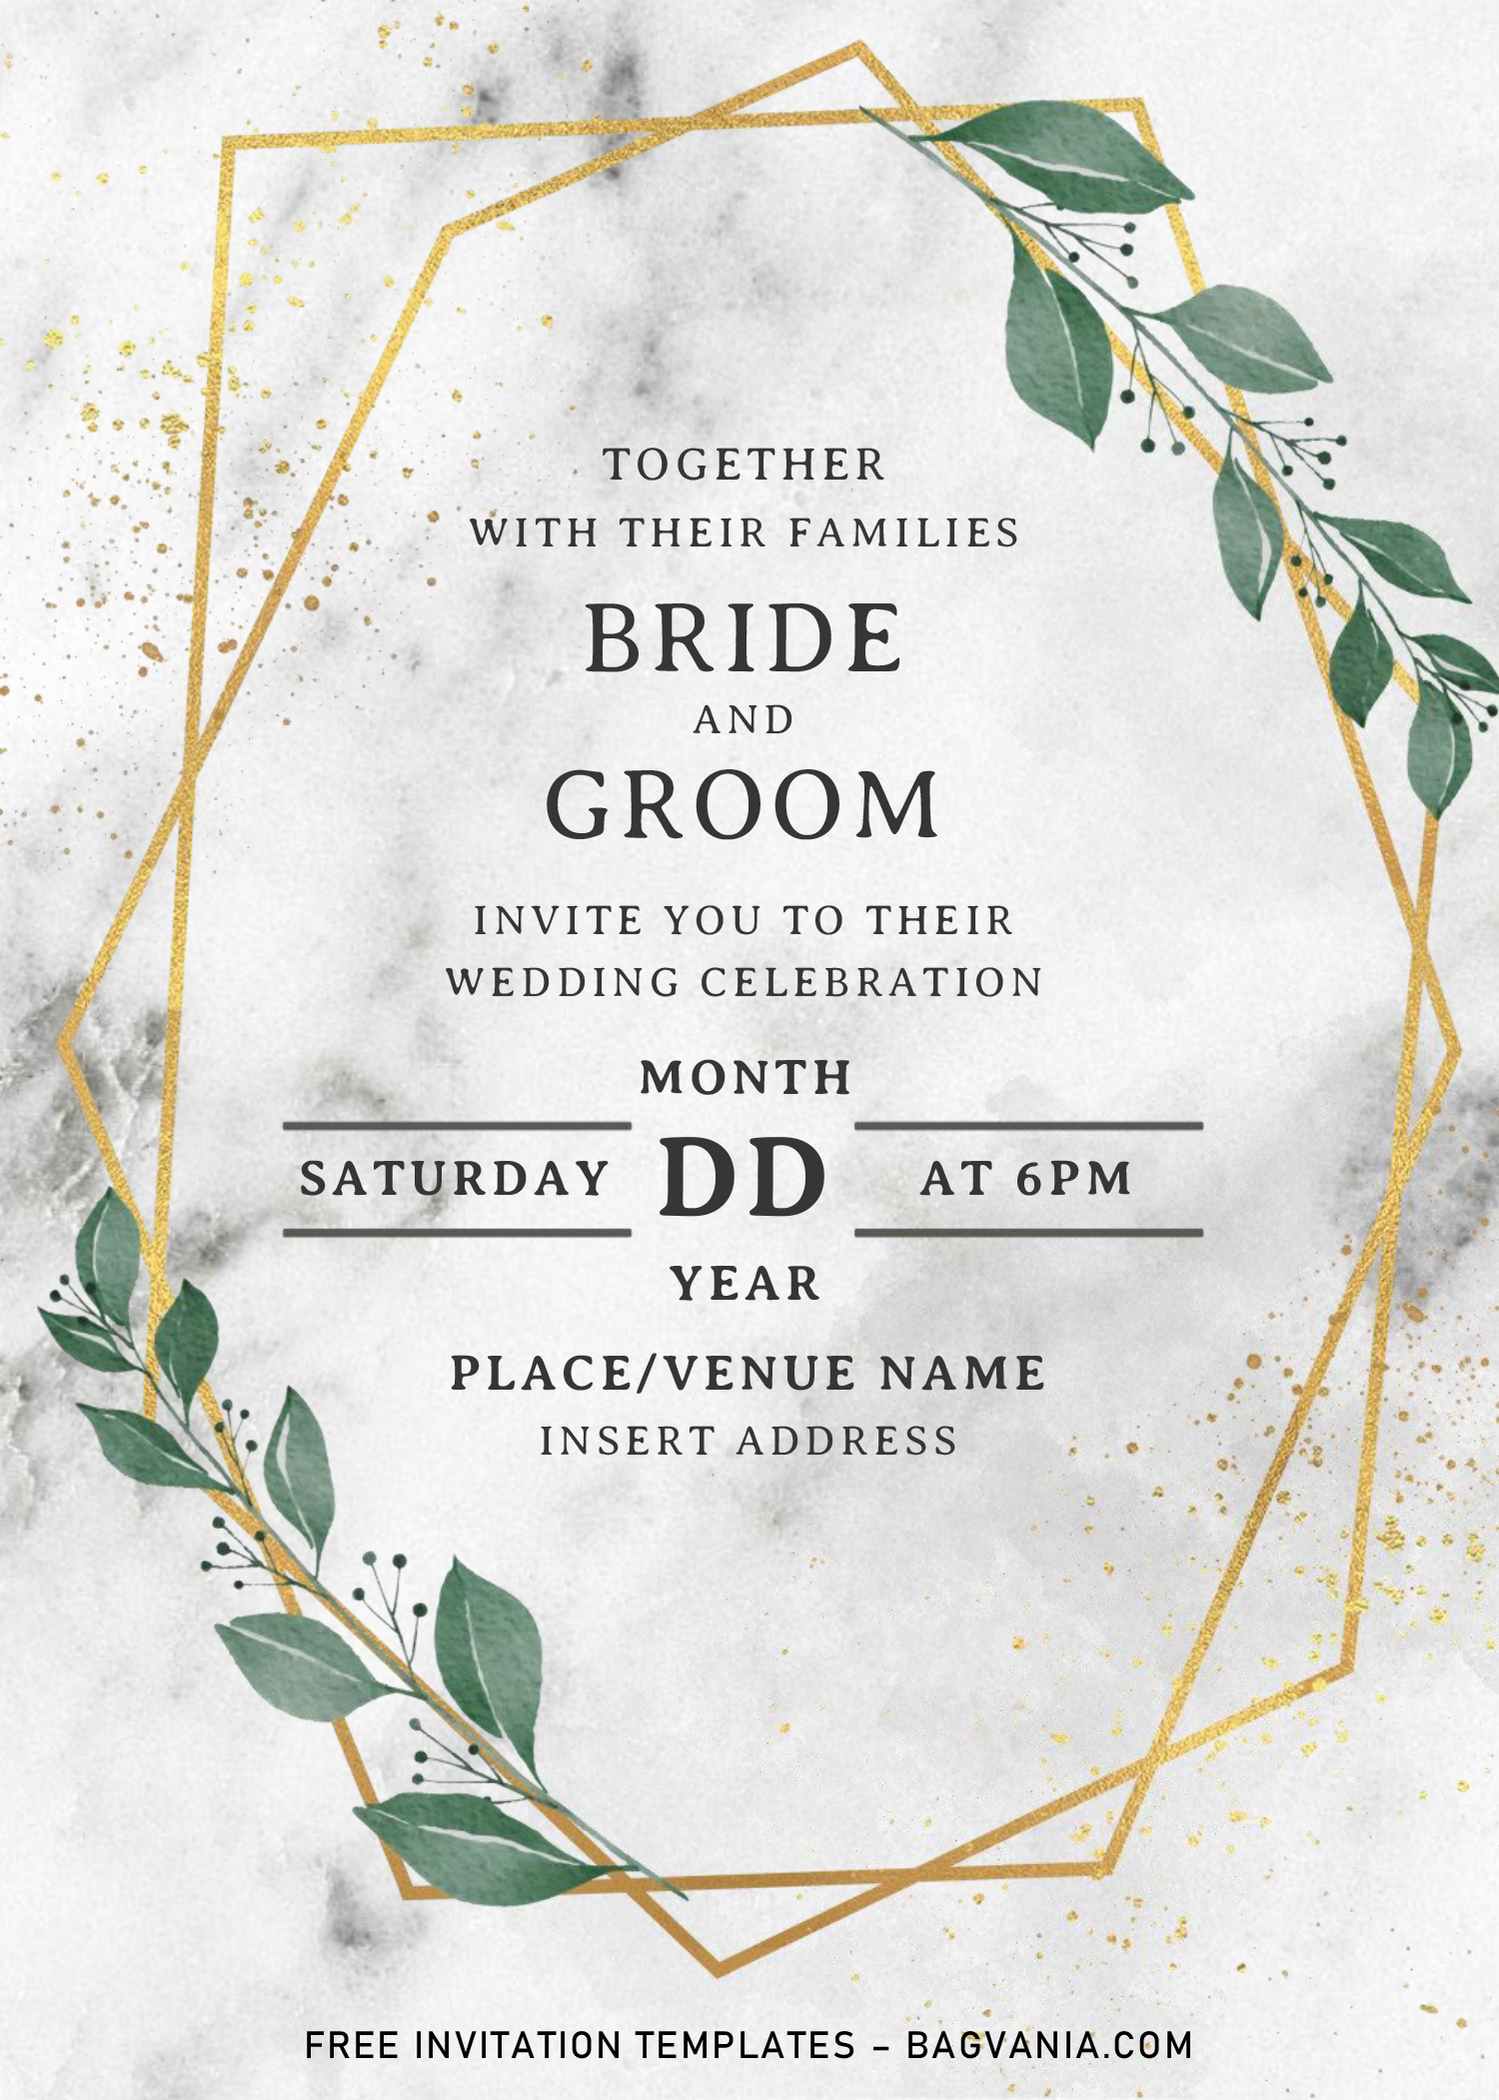 Free Editable Wedding Invitation Templates For Word